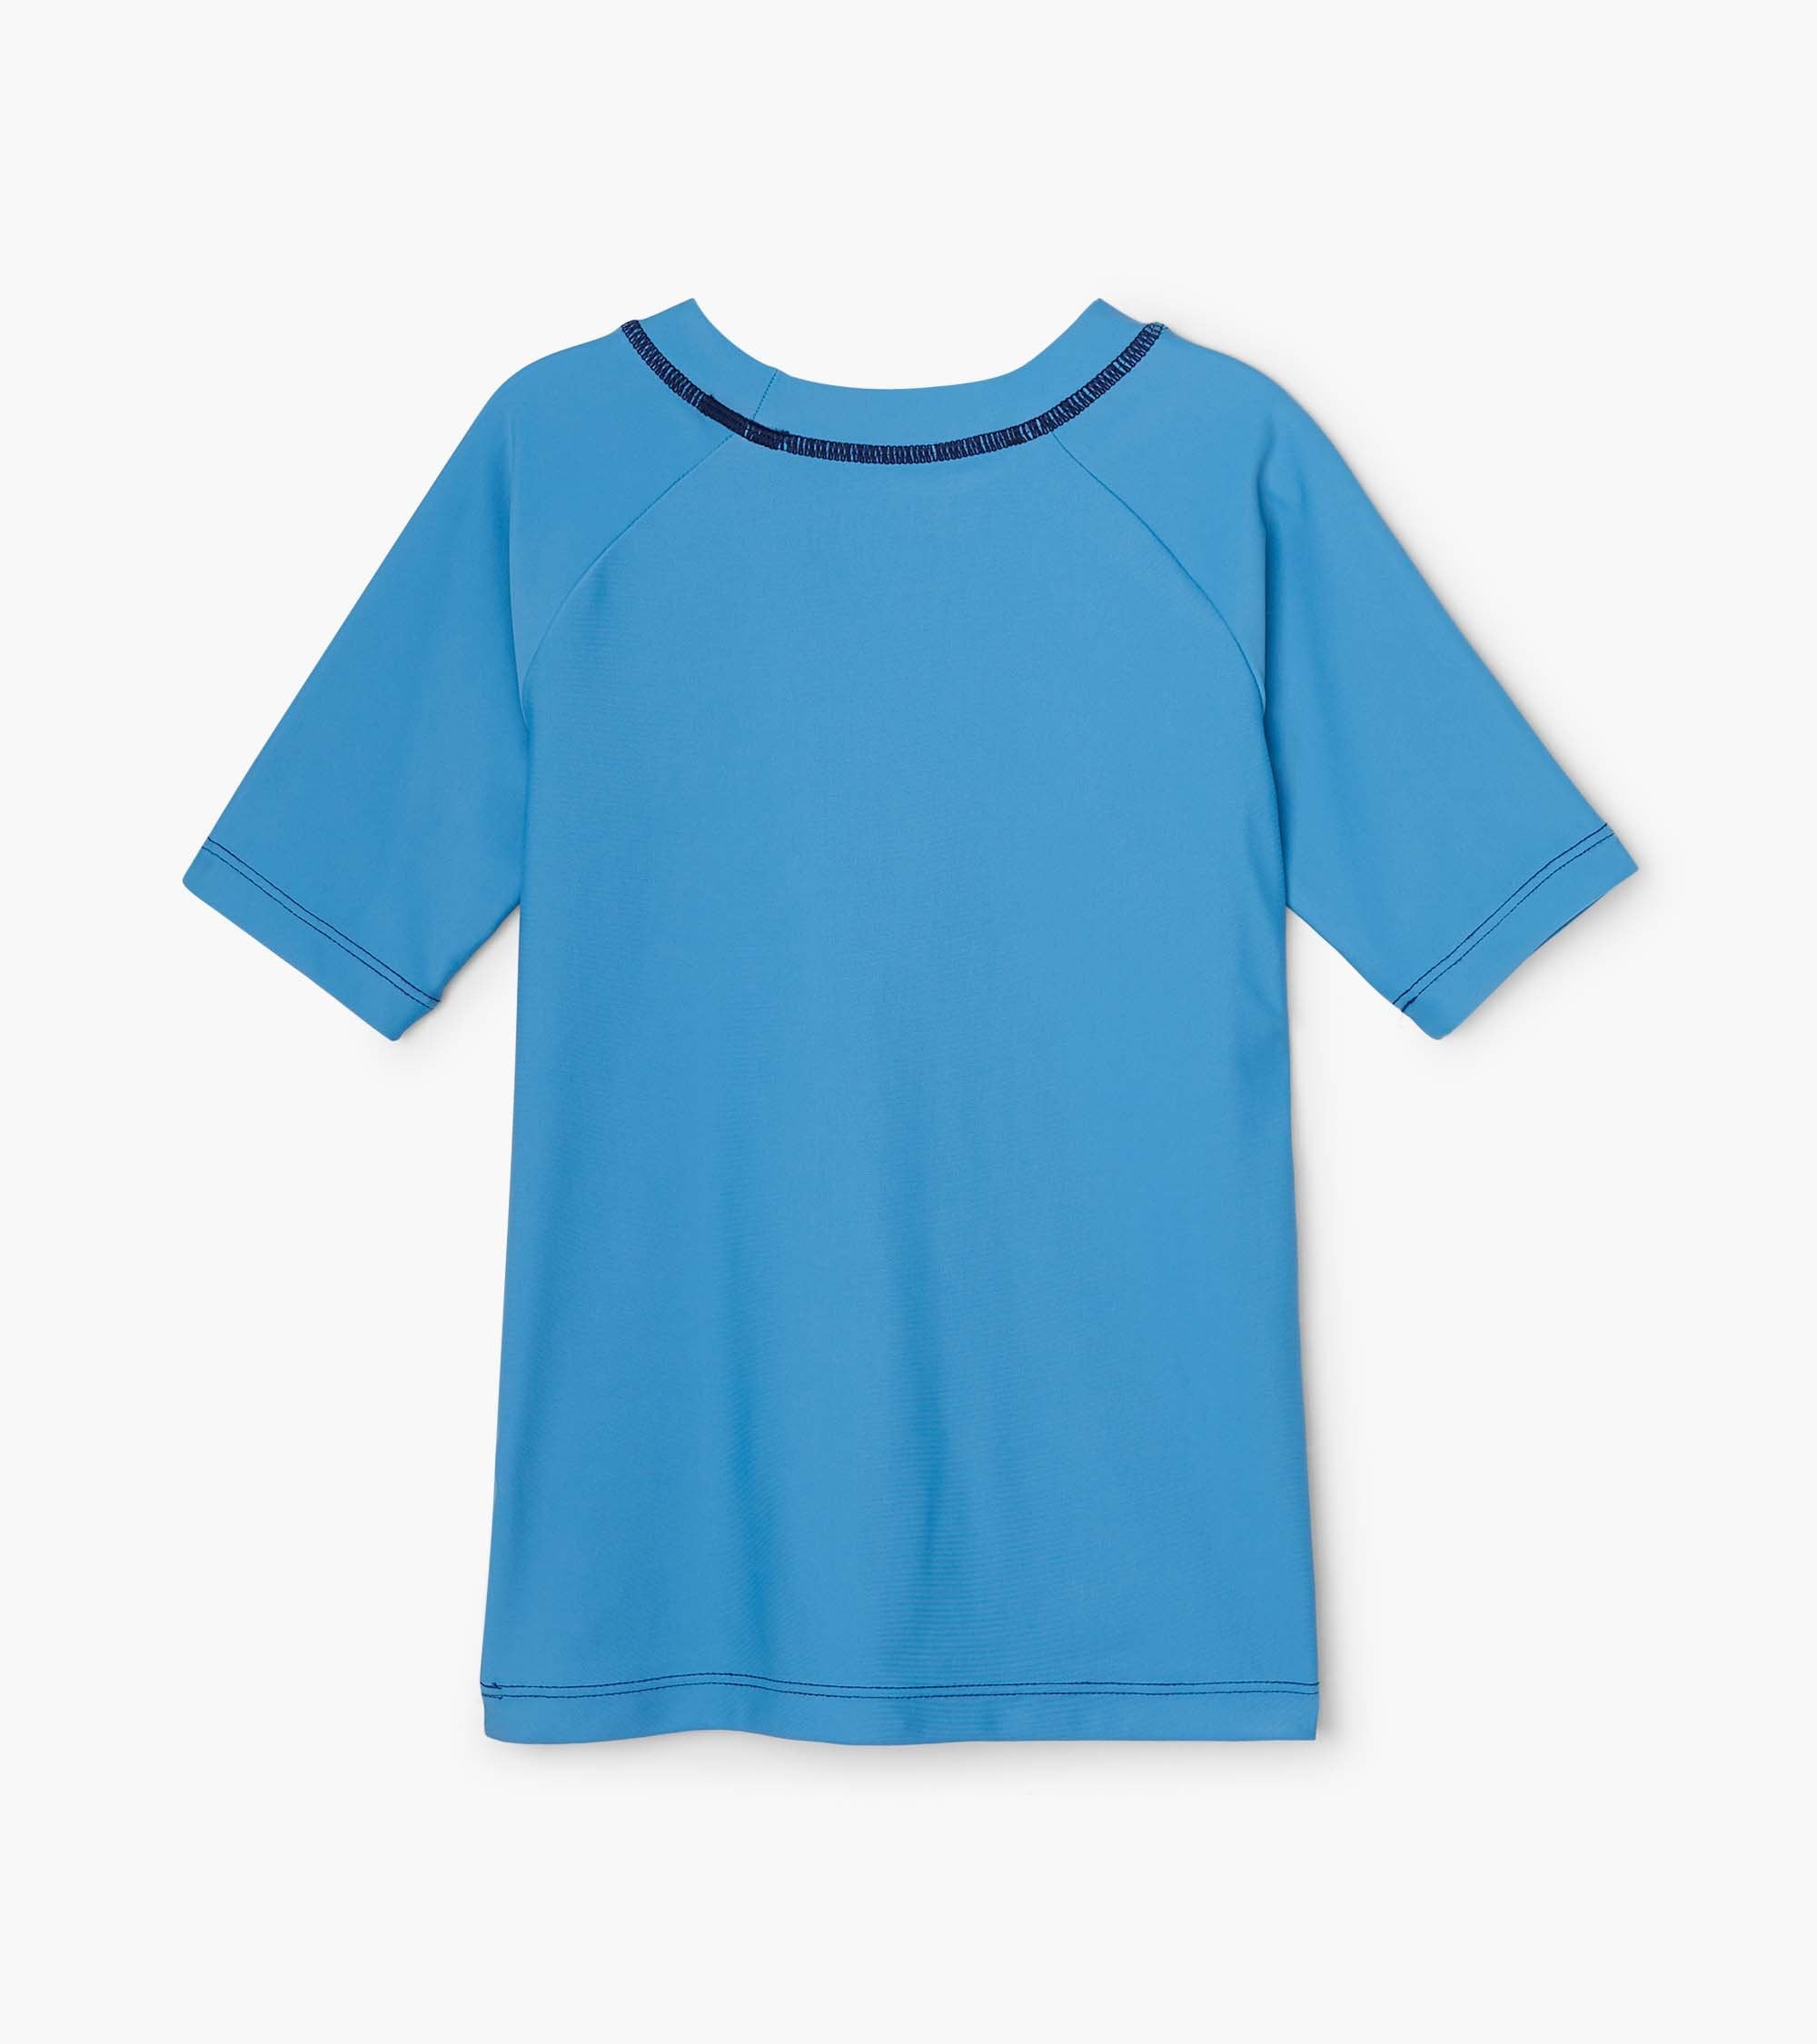 Hatley ’Deep Sea Shark’ Rashguard Top - T-shirt